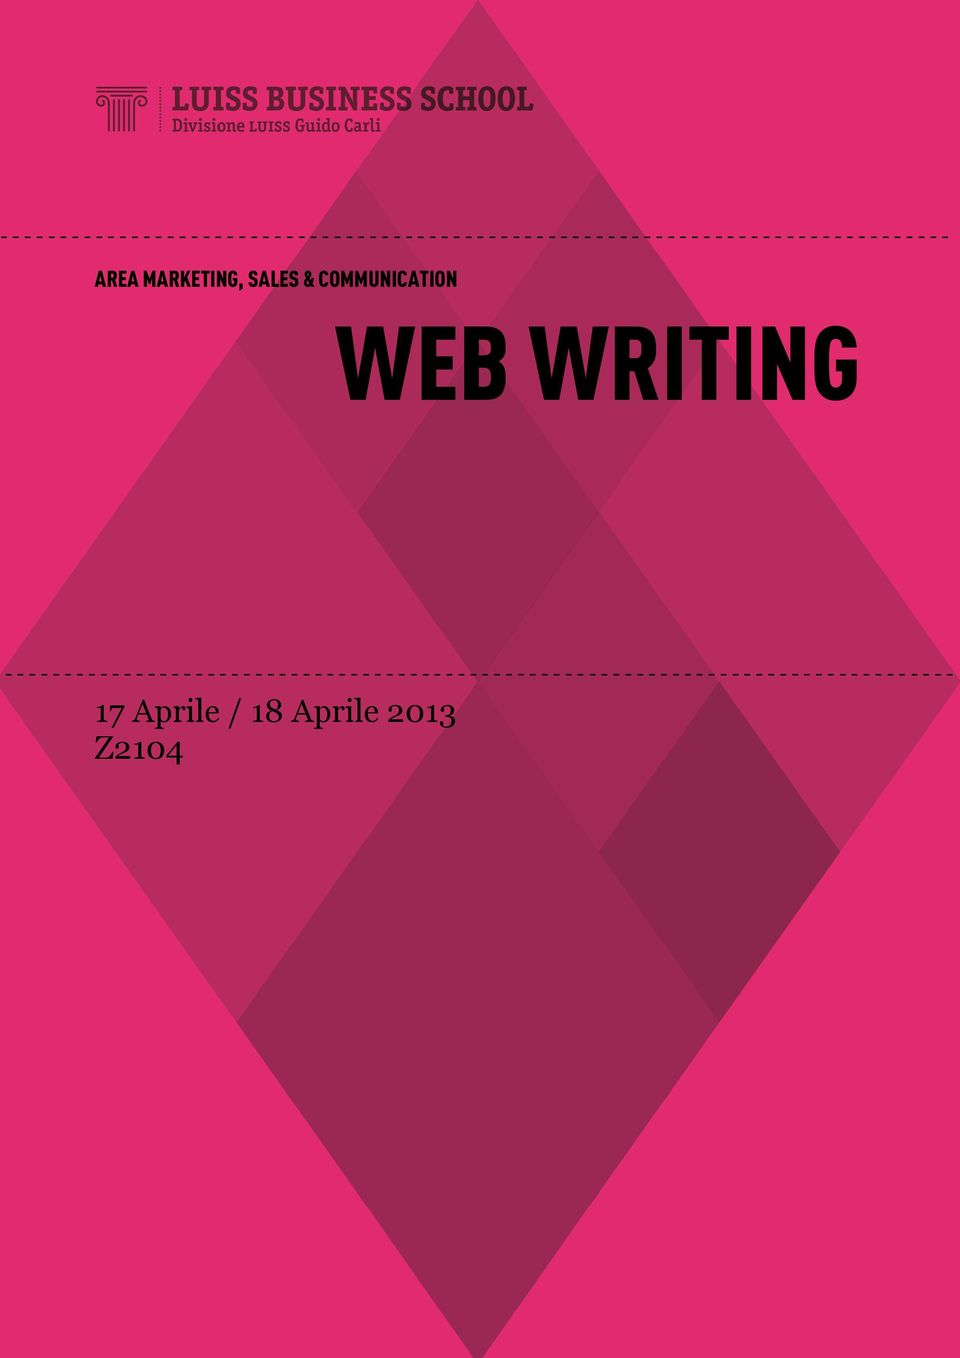 WEB WRITING  - - - - - - - - - - - - - - - - - - - - - - - - - - - - - - 17 Aprile / 18 Aprile 2013